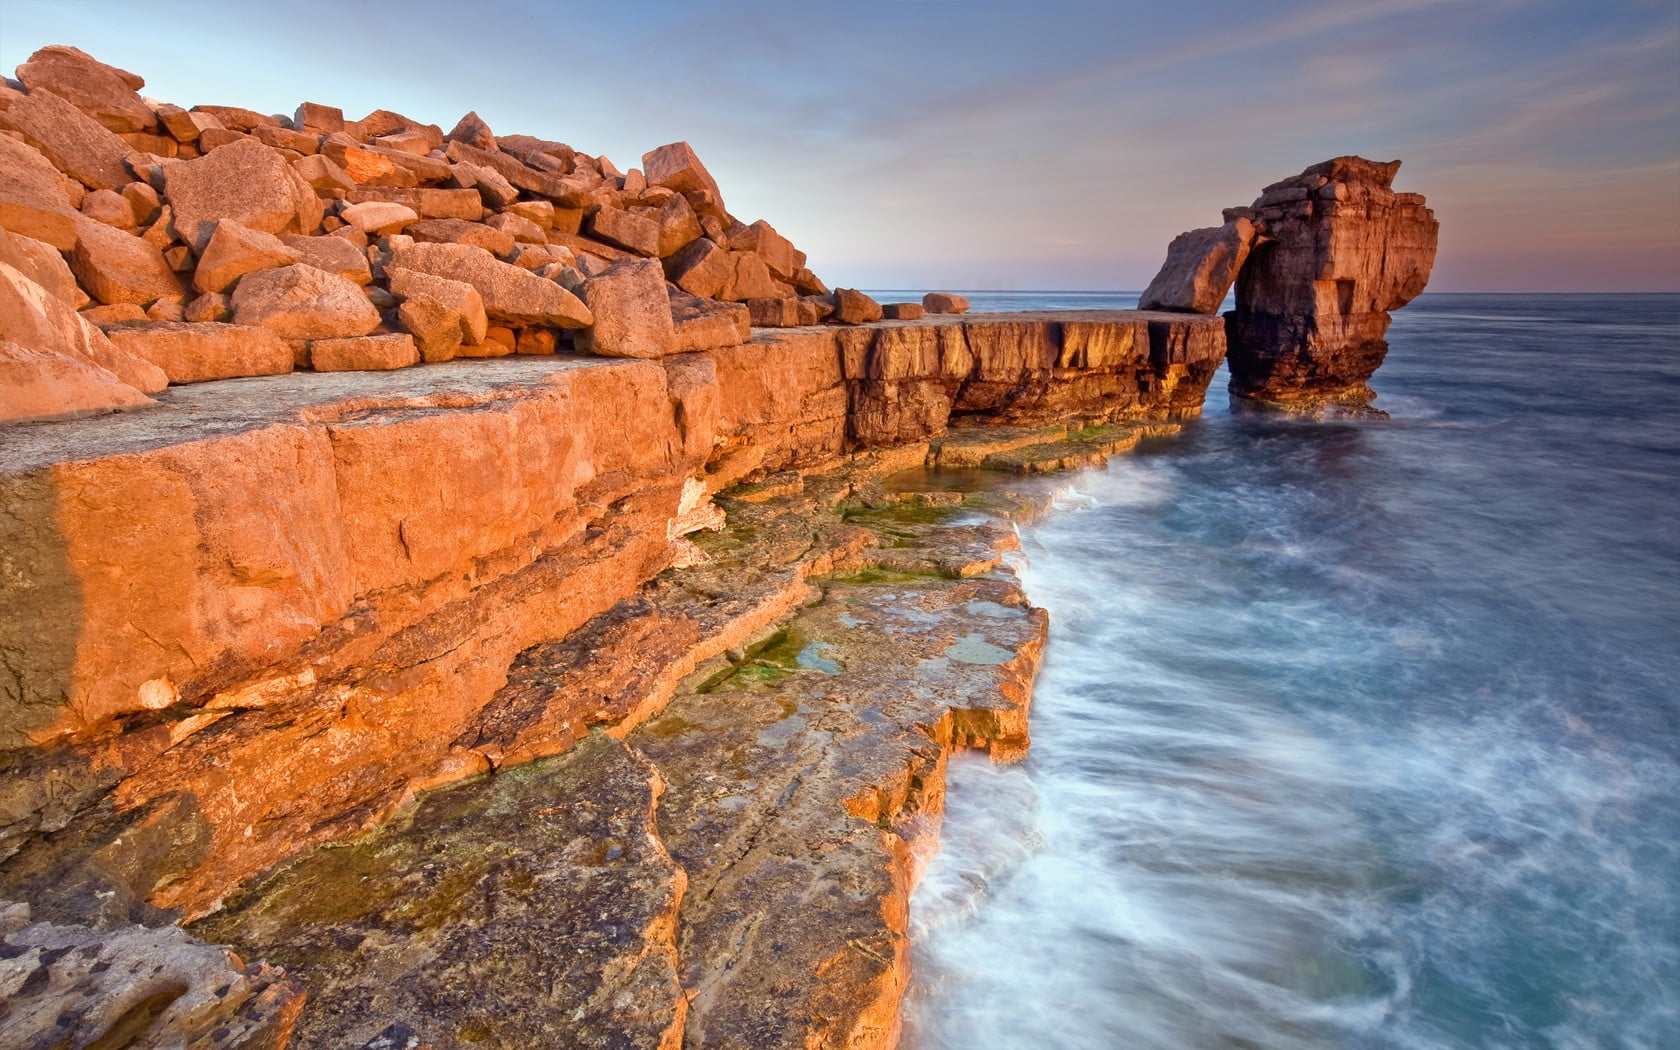 cliff beside body of water, landscape, nature, rock - object